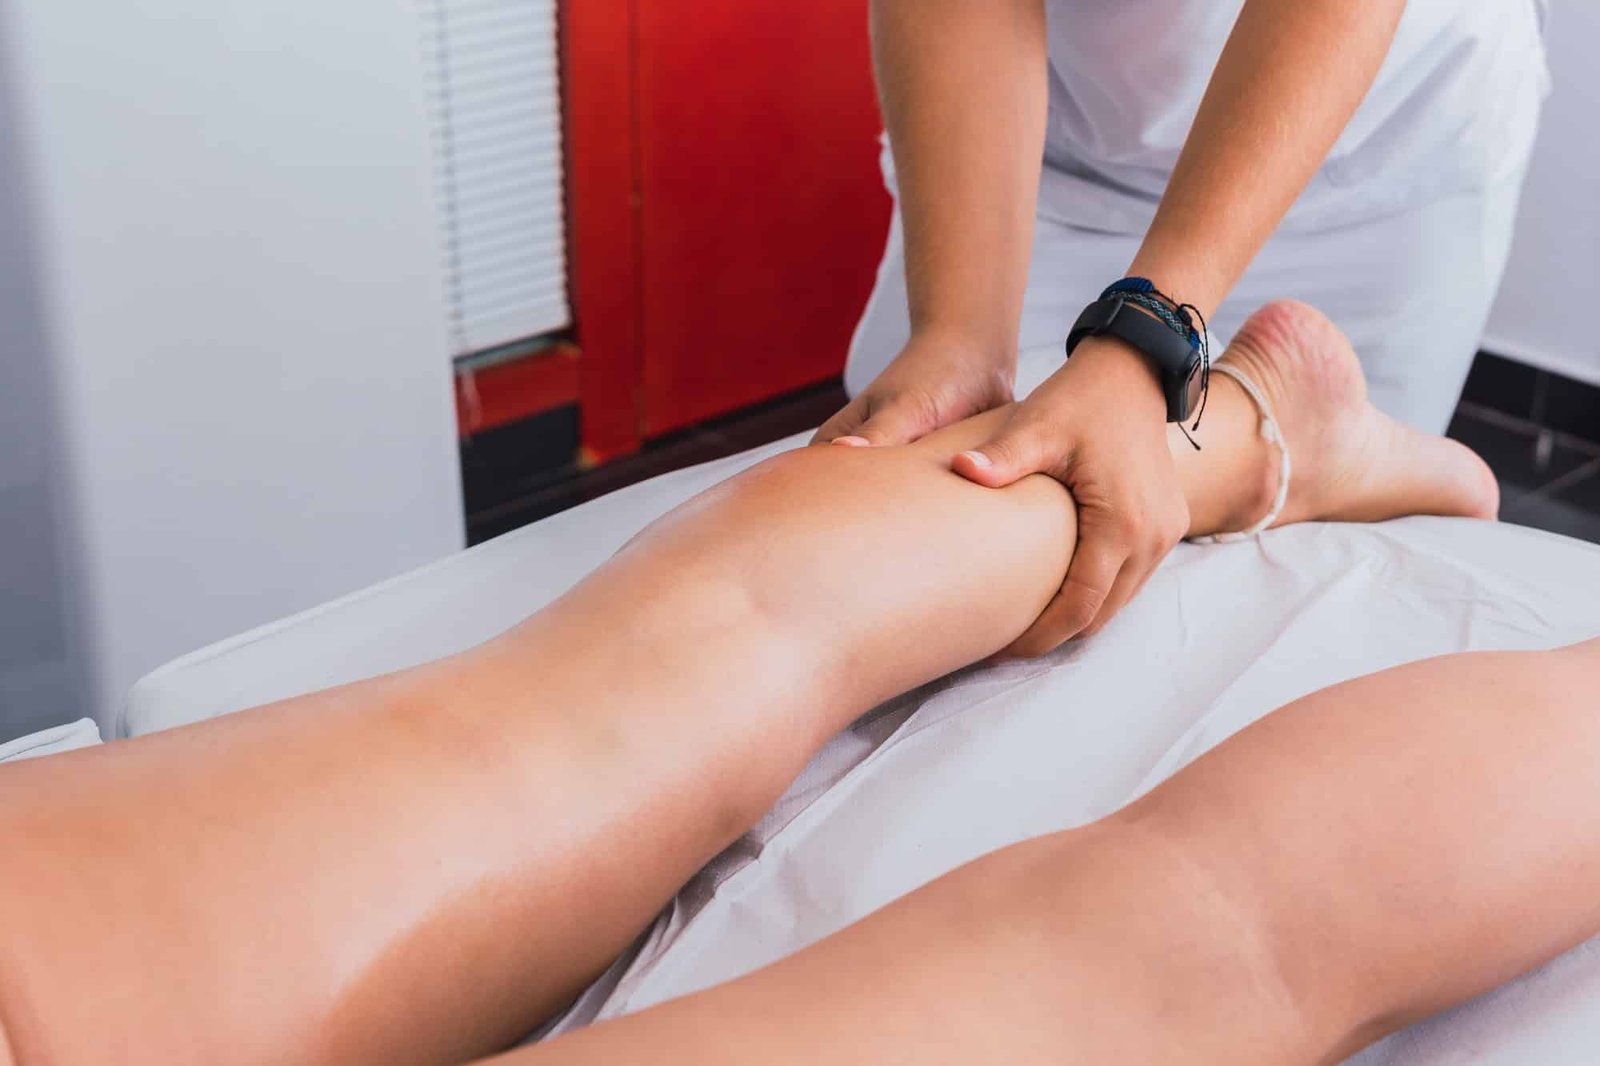 Massage therapist massaging woman calf in spa center